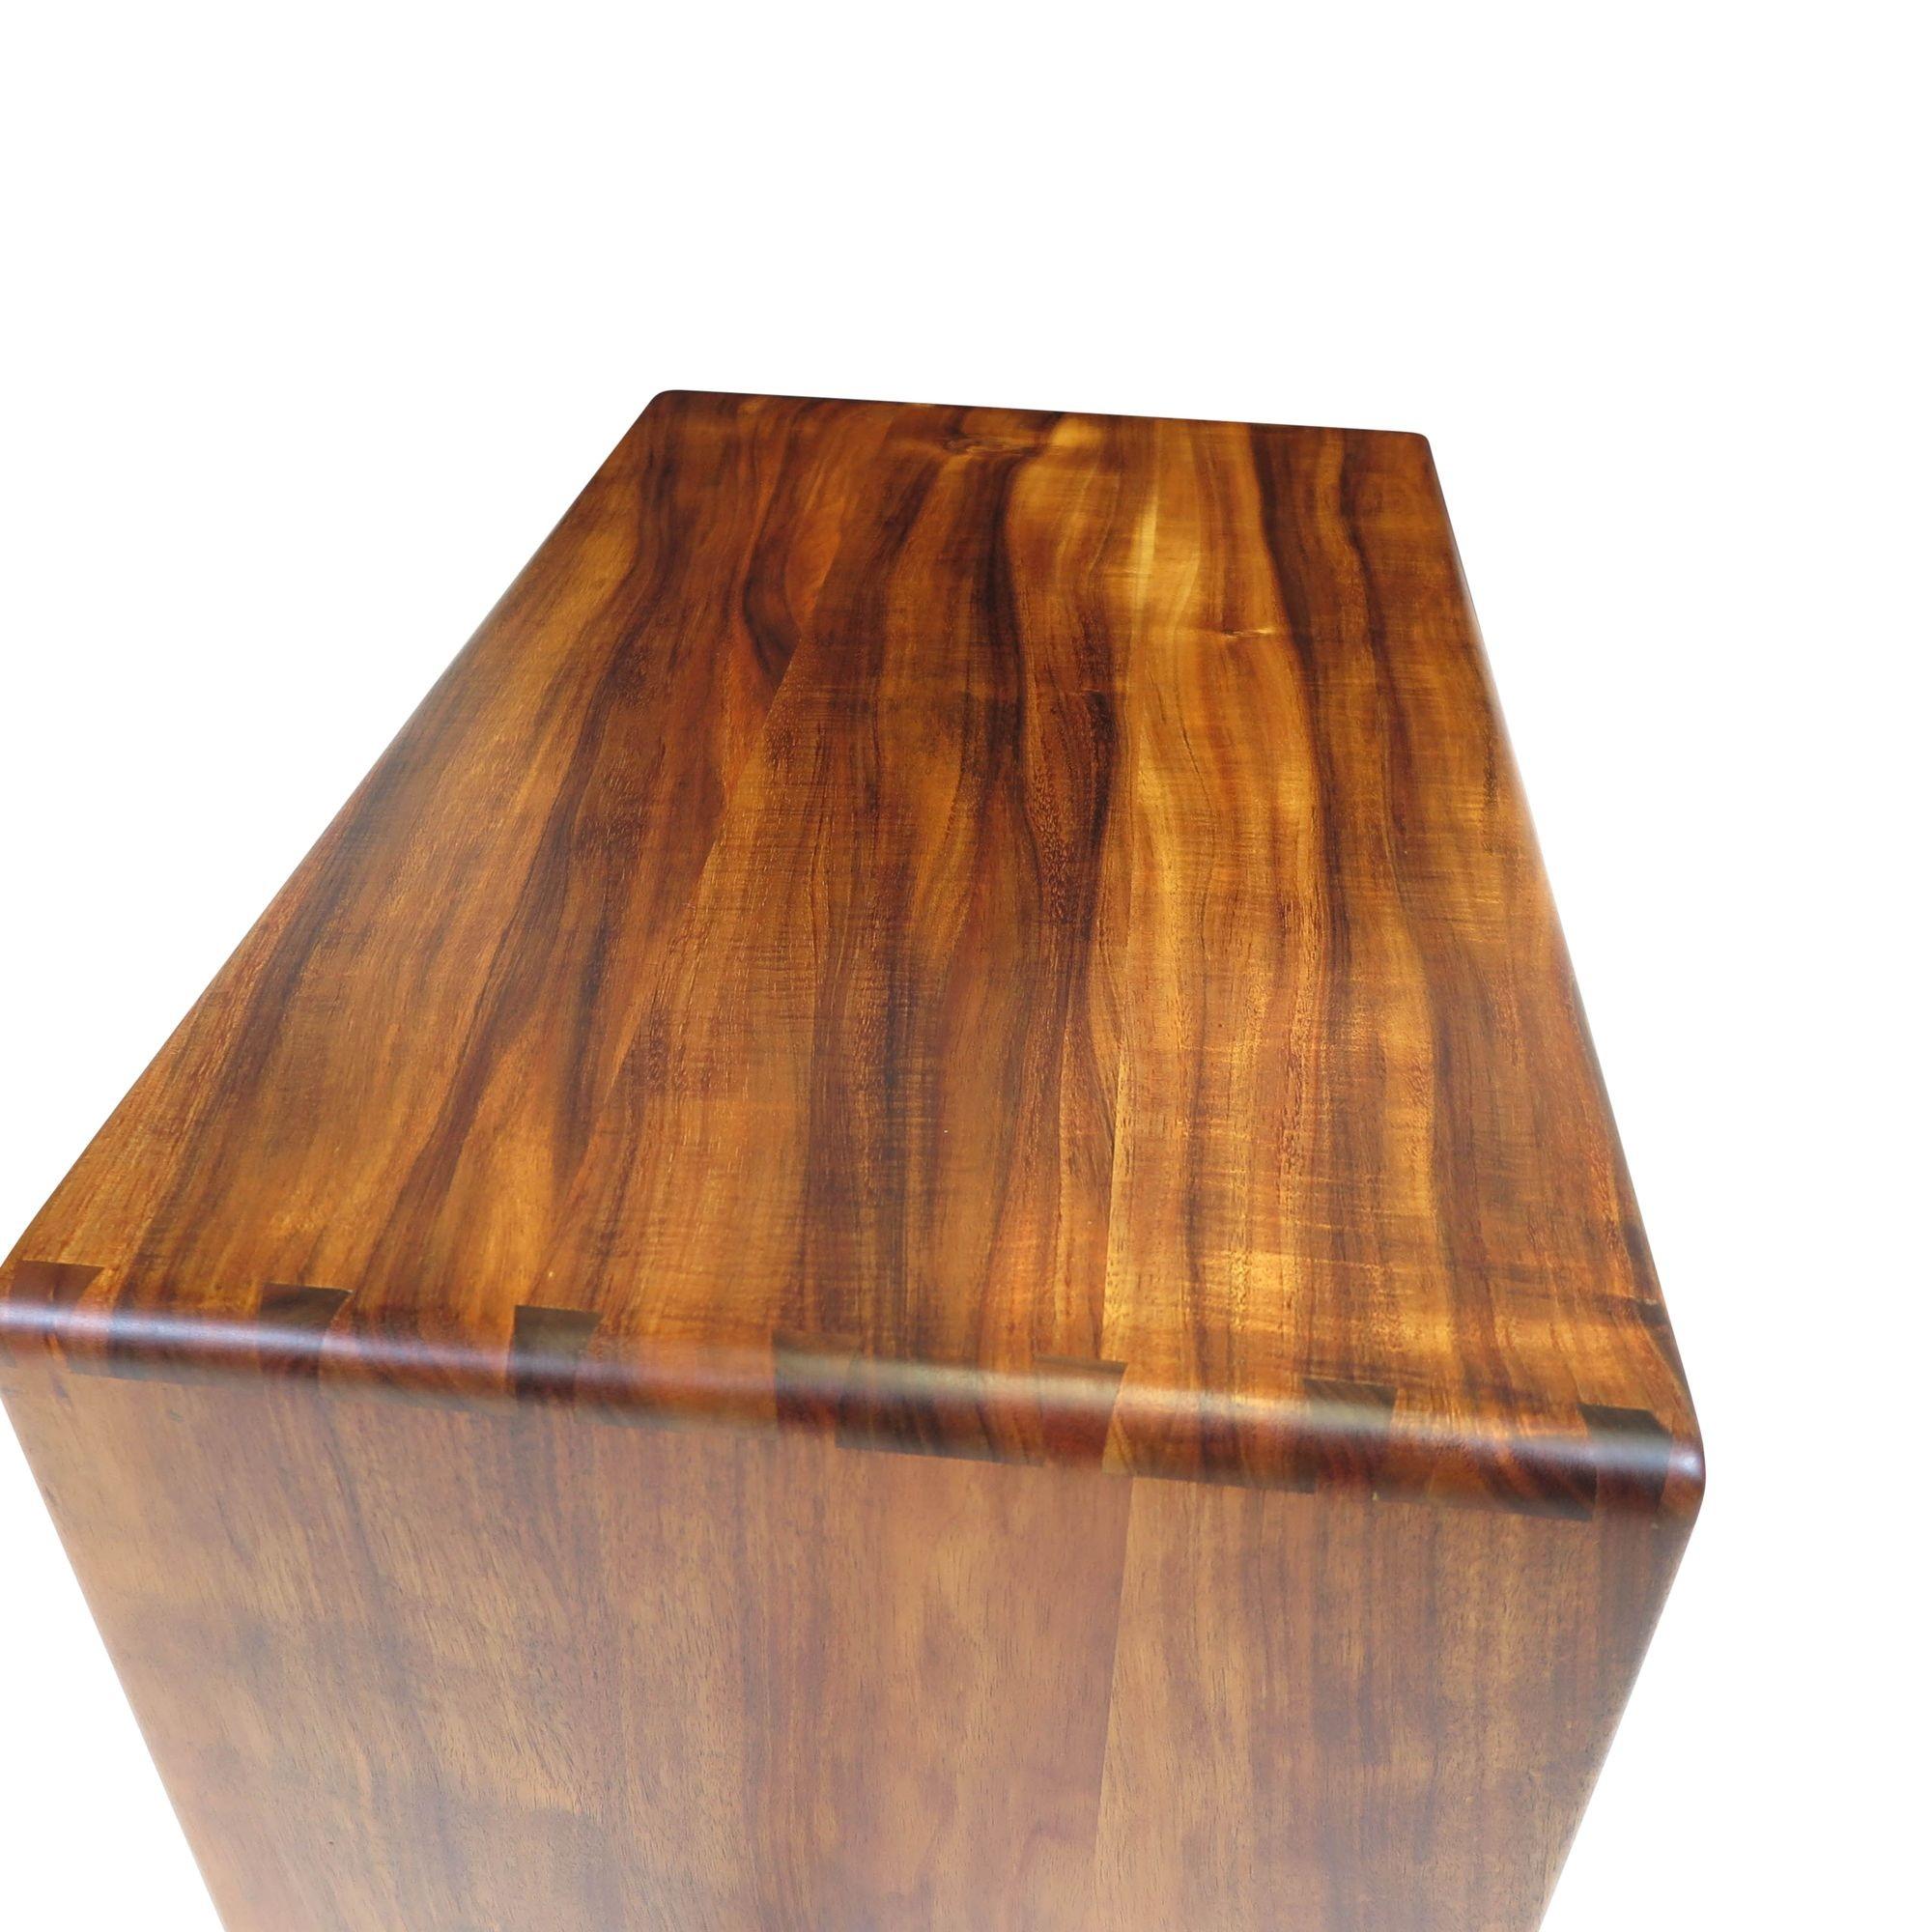 Wood Koa California Studio Craft Filing Cabinet #2 For Sale